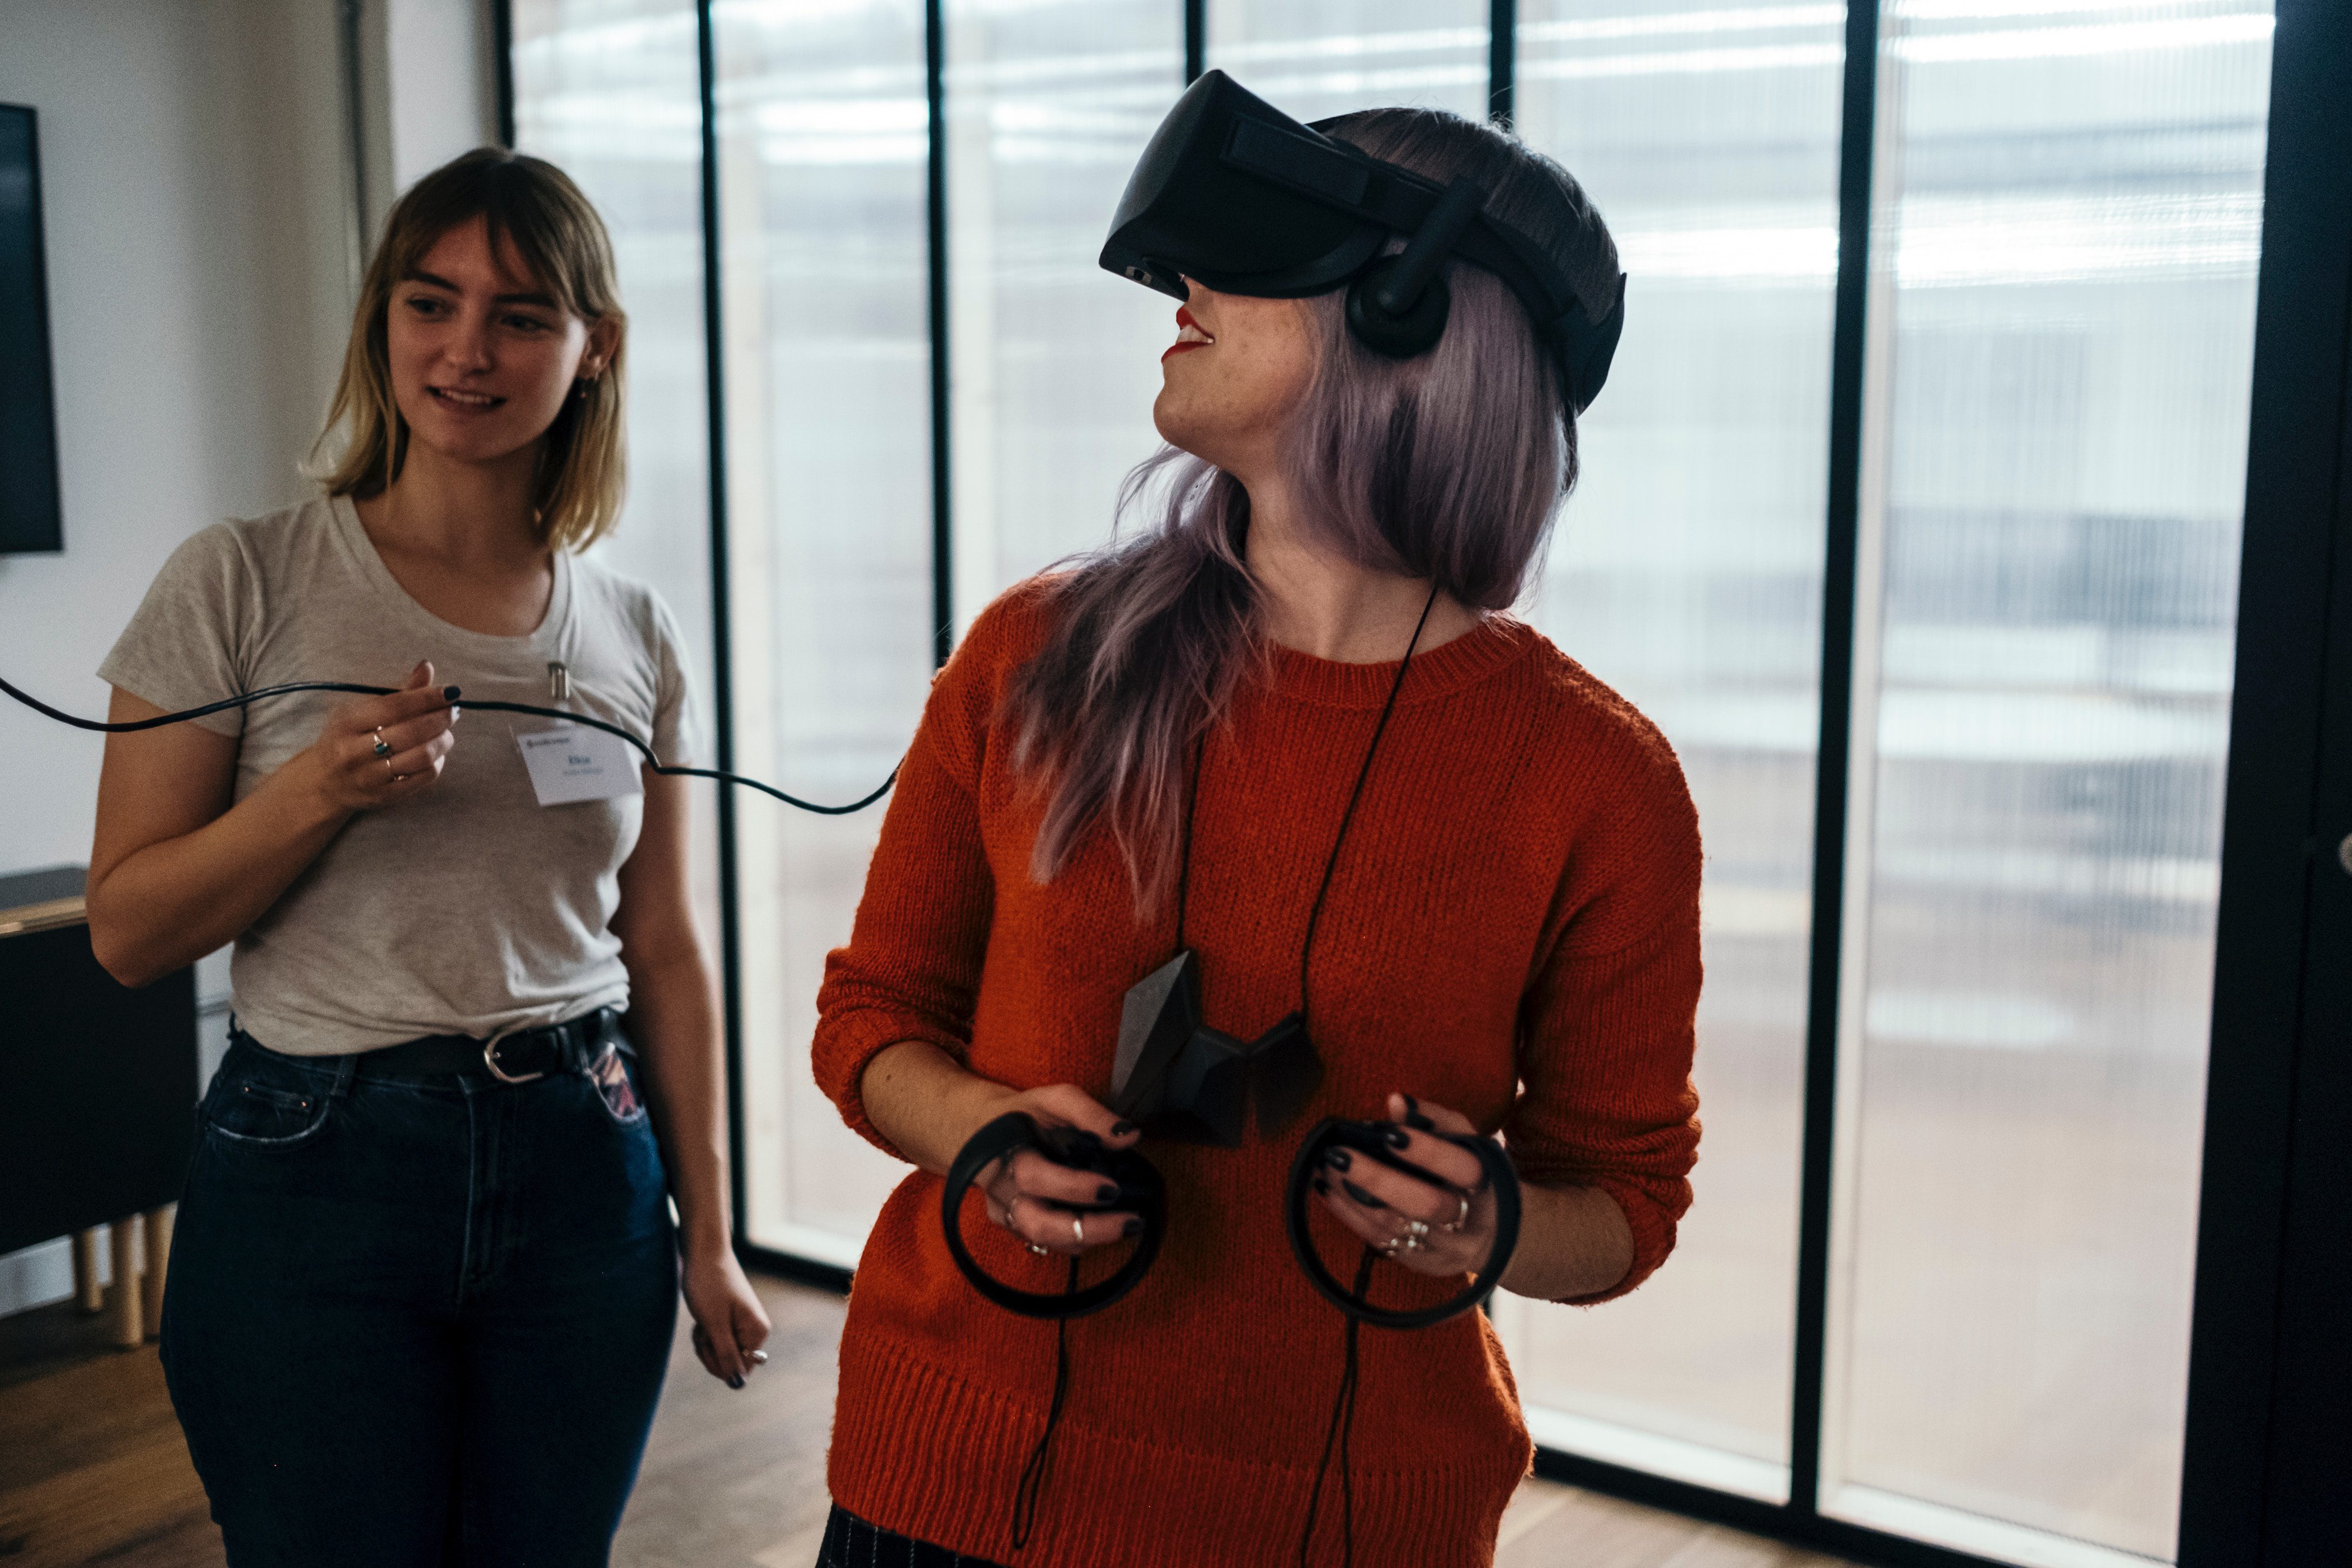 virtual reality at events